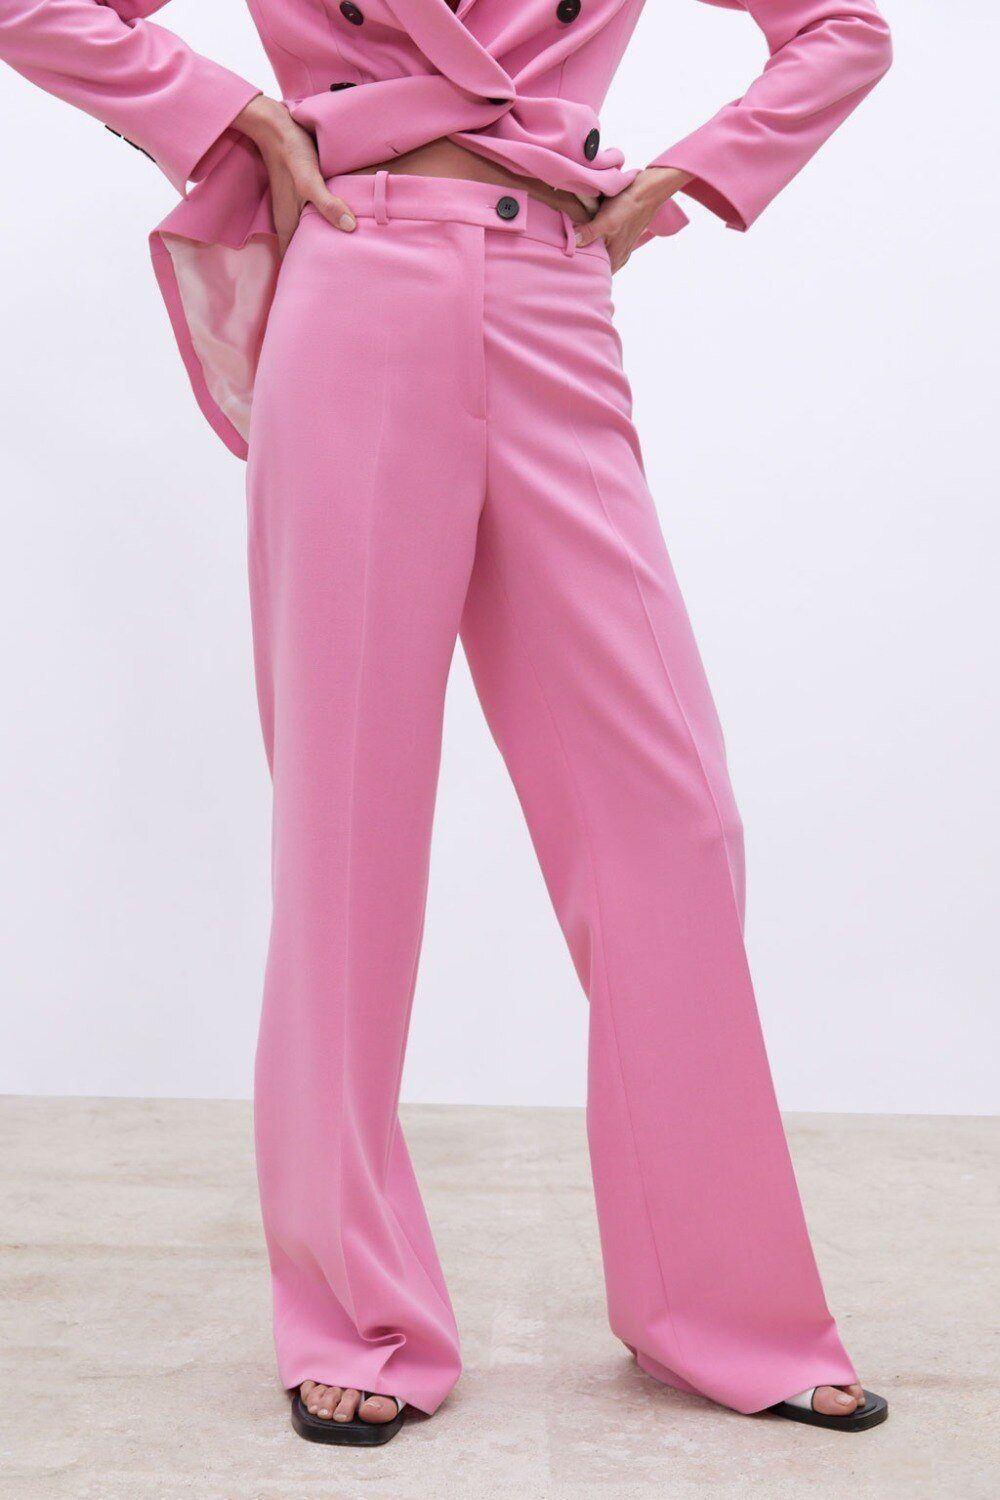 Buy Women Pink Pantsuits at LeStyleParfait